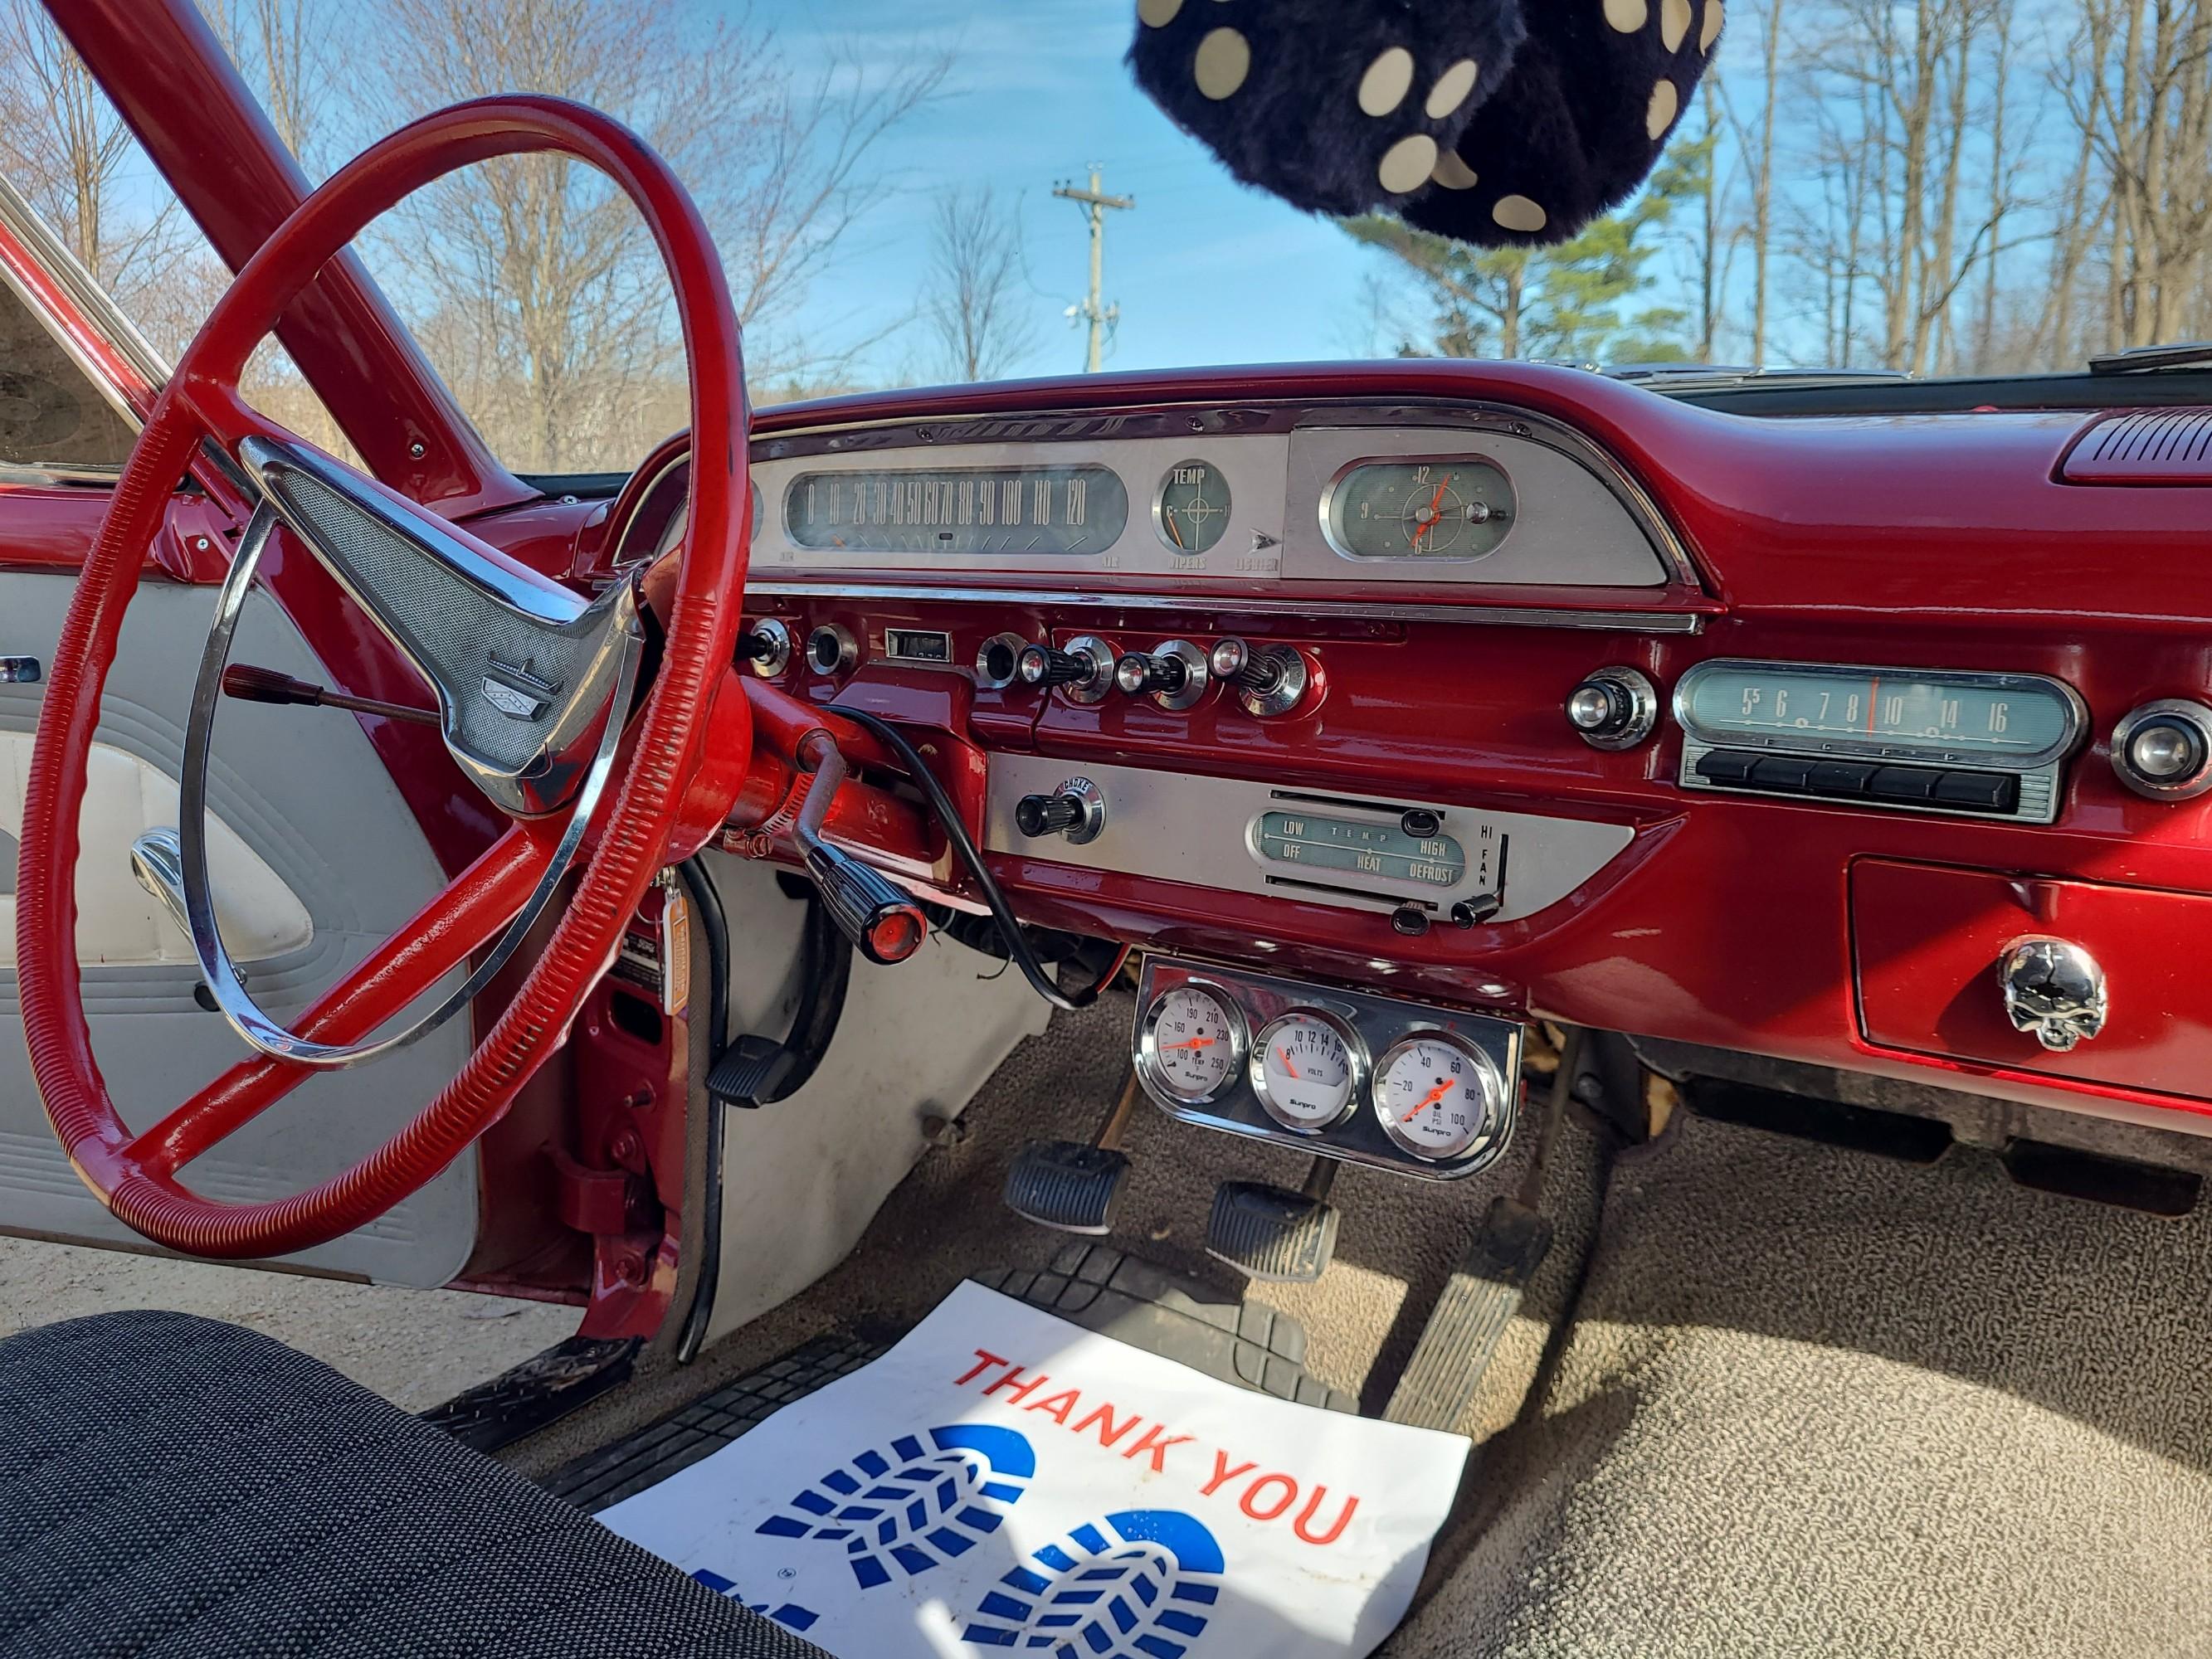 1960 Ford Fairlane 500